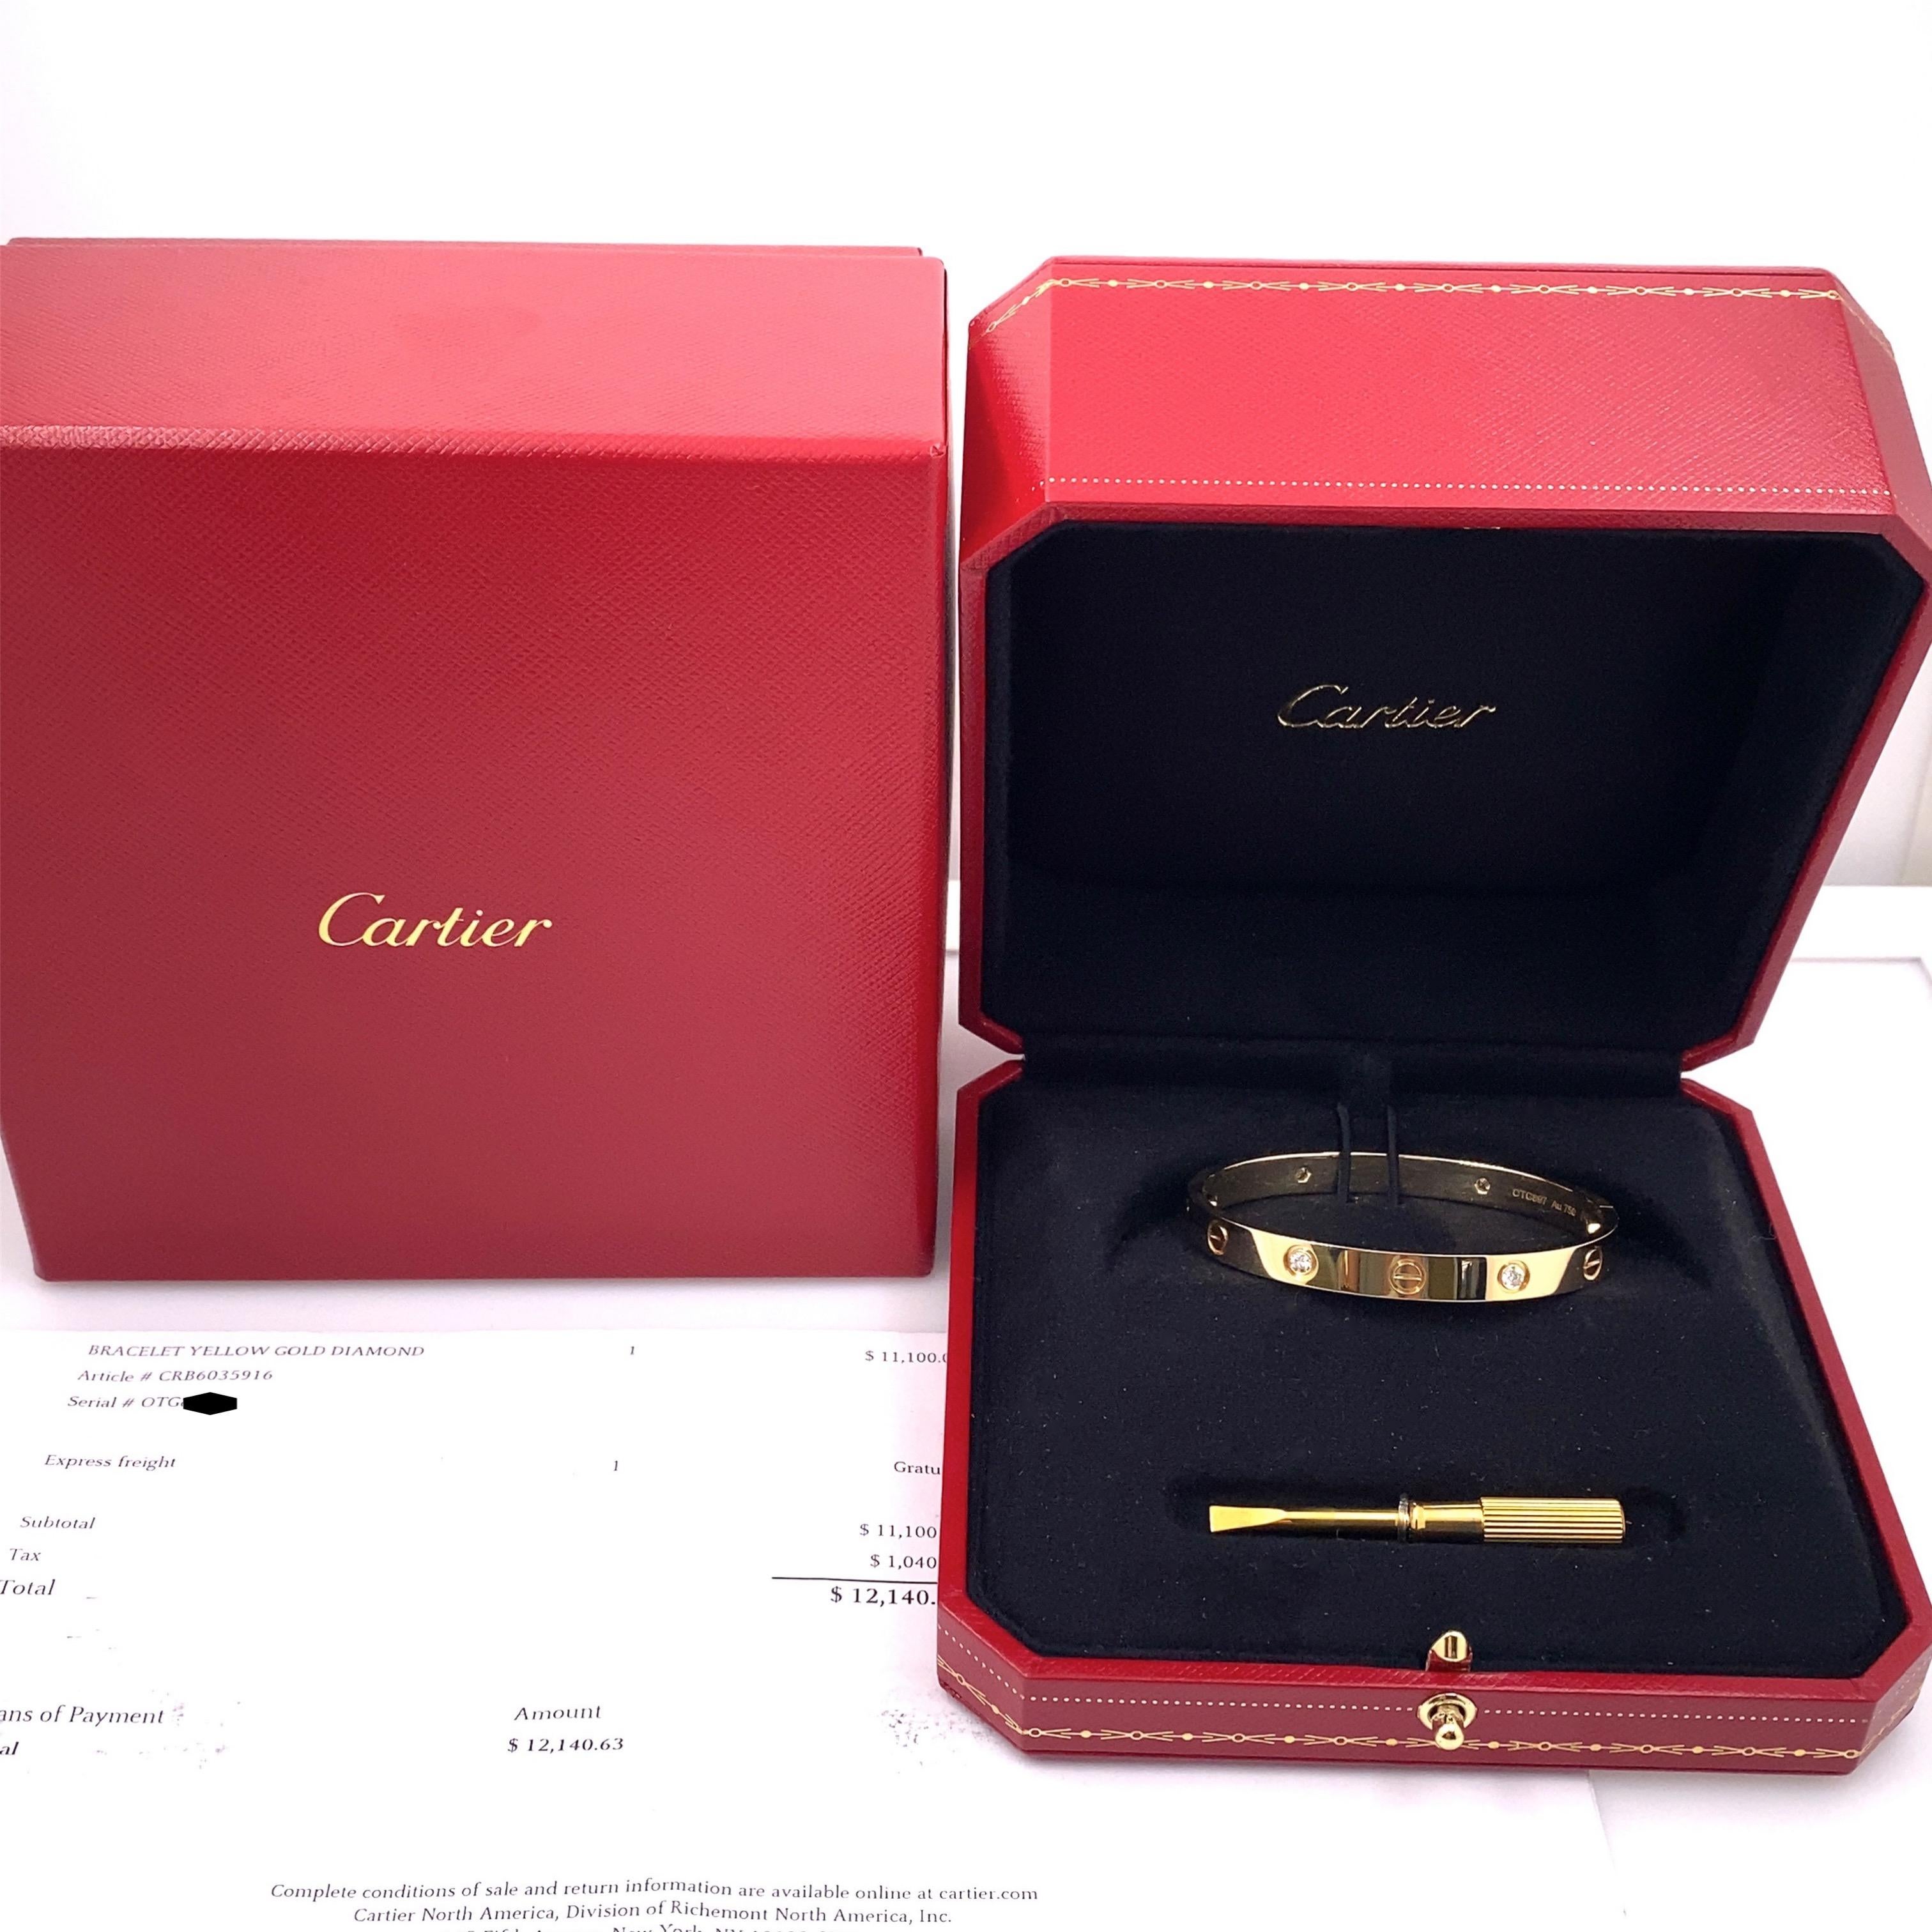 Cartier 4 Diamond Love Bangle Bracelet 
Style:  Bangle
Ref. number:  CRB6035916
Metal:  18K Yellow Gold
Size:  16
Diamonds:  4 Round Brilliant Diamonds 0.42 tcw
Width:  6.1 MM  
Hallmark:  © Cartier 16 OTG*** Au750
Includes:  Cartier Receipt -